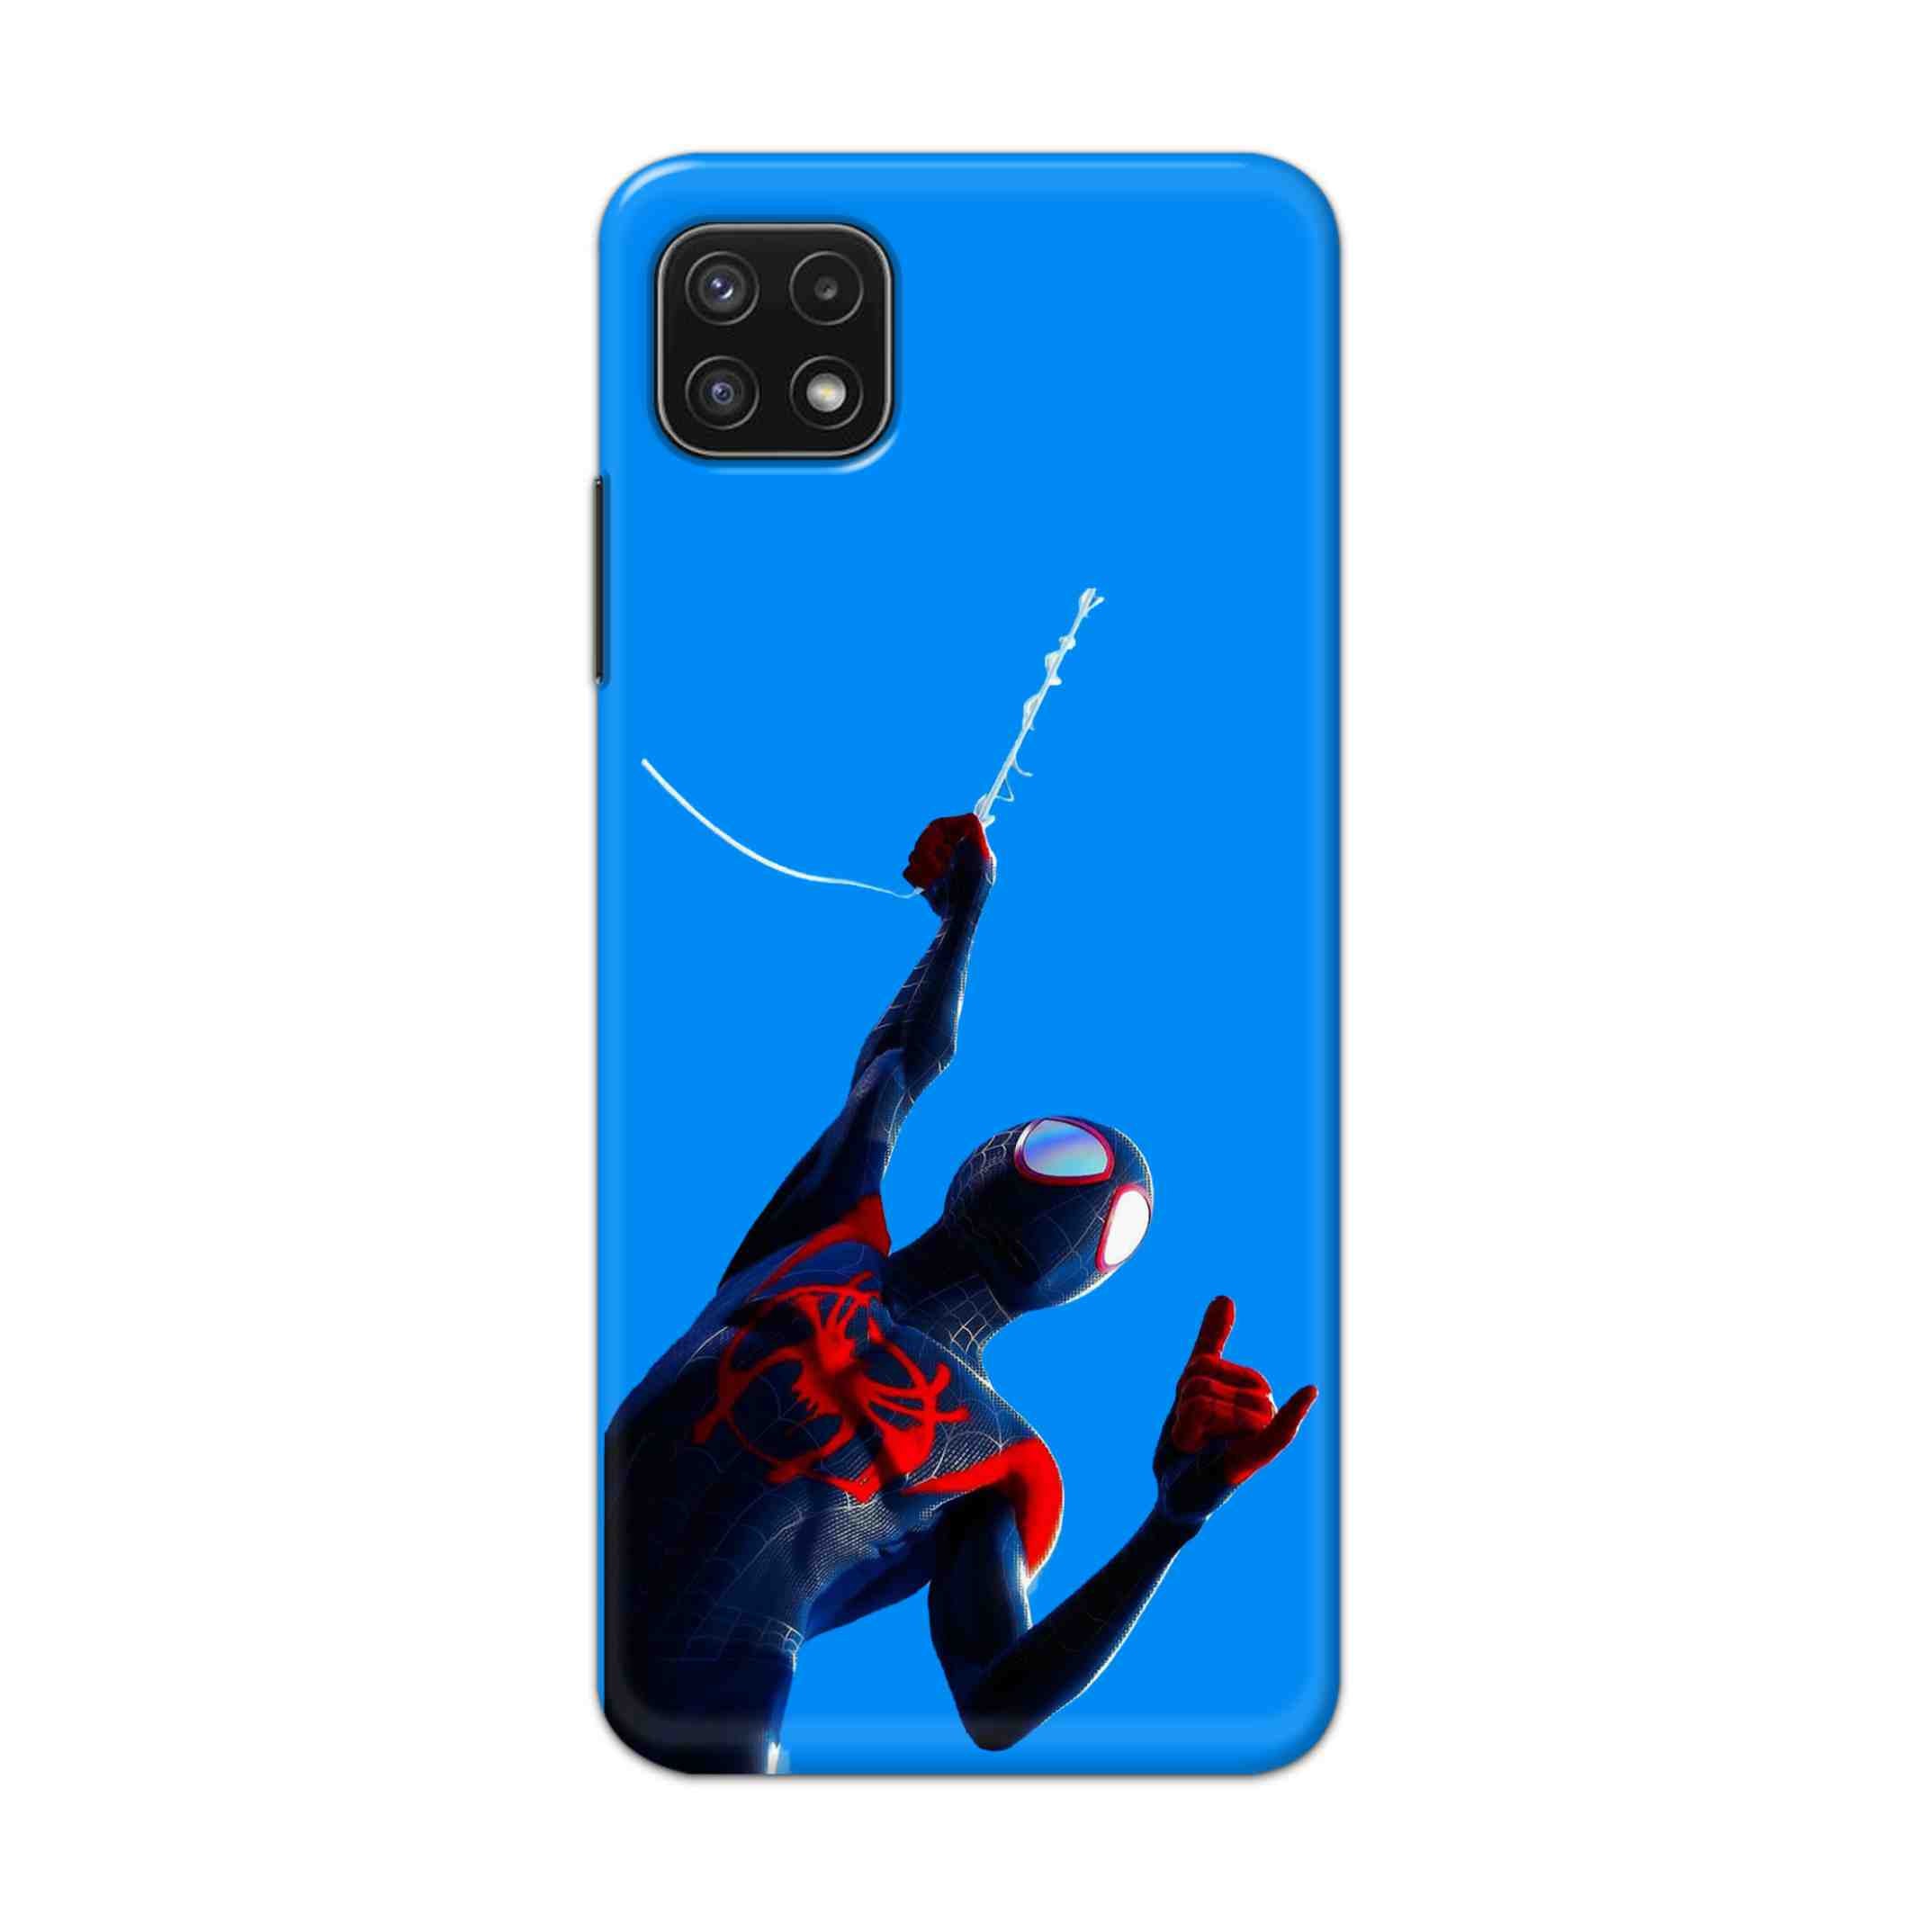 Buy Miles Morales Spiderman Hard Back Mobile Phone Case Cover For Samsung A22 5G Online